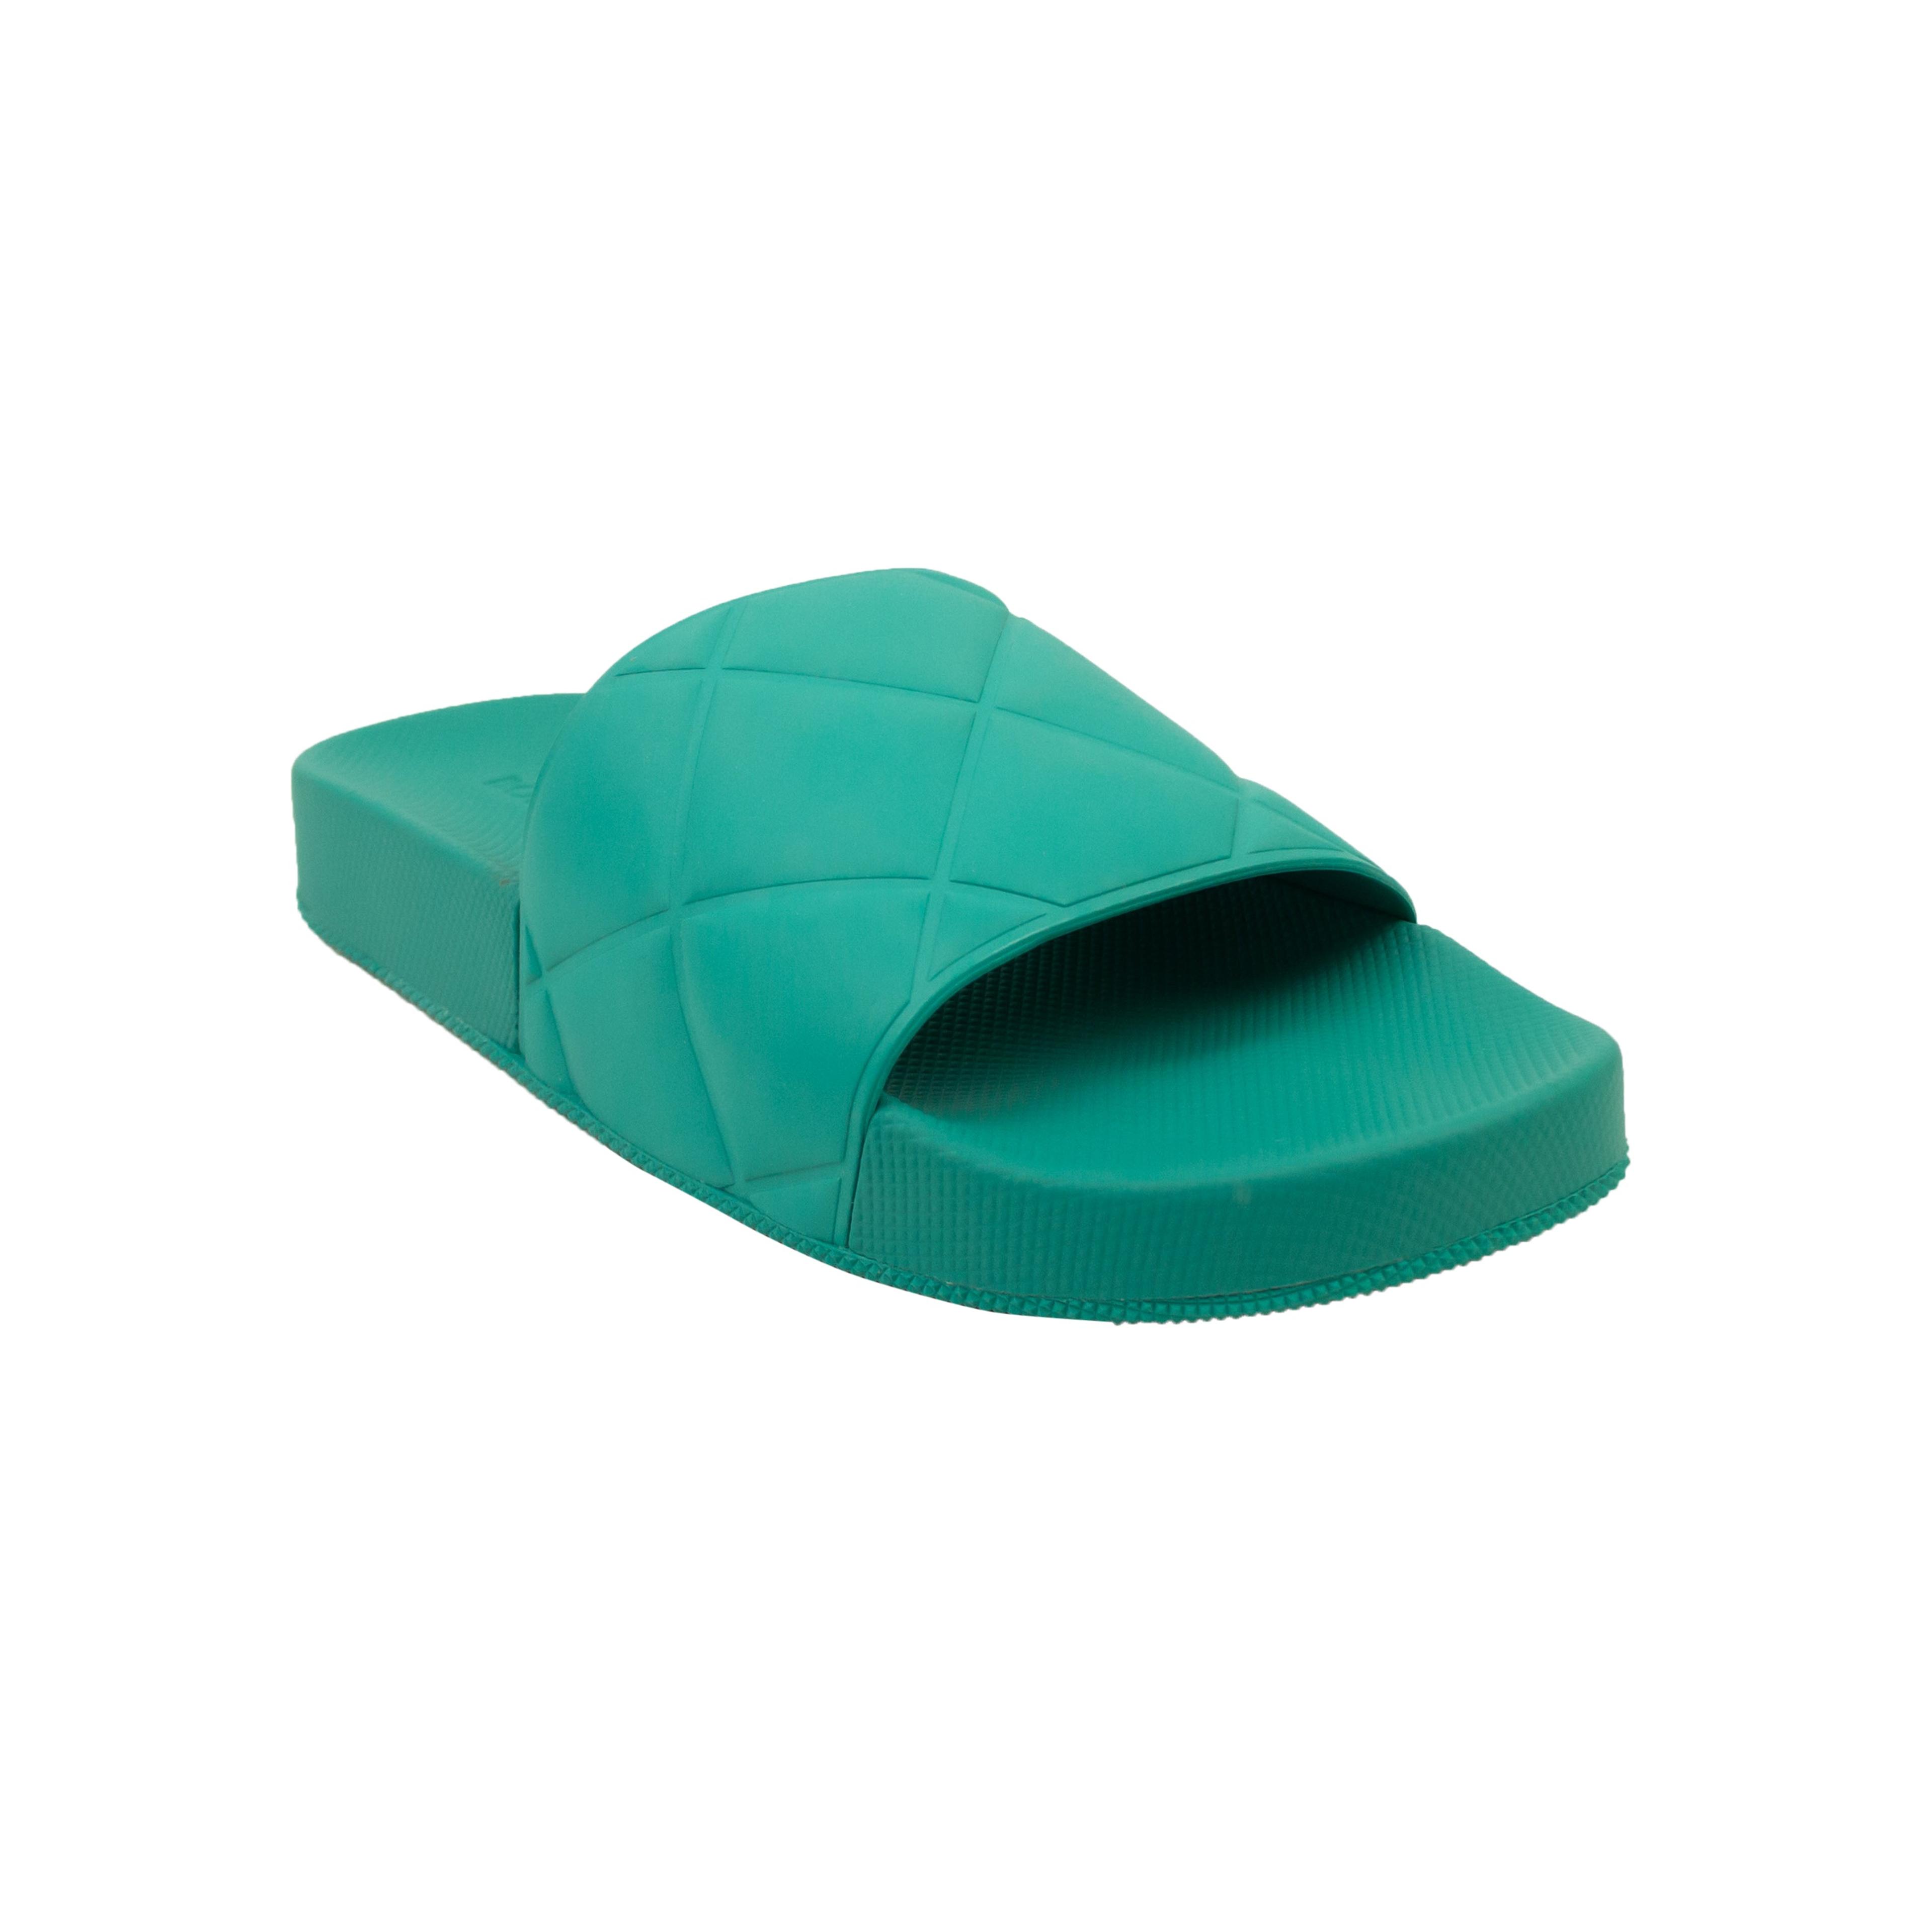 Alternate View 1 of Teal Blue Rubber Slide Sandals